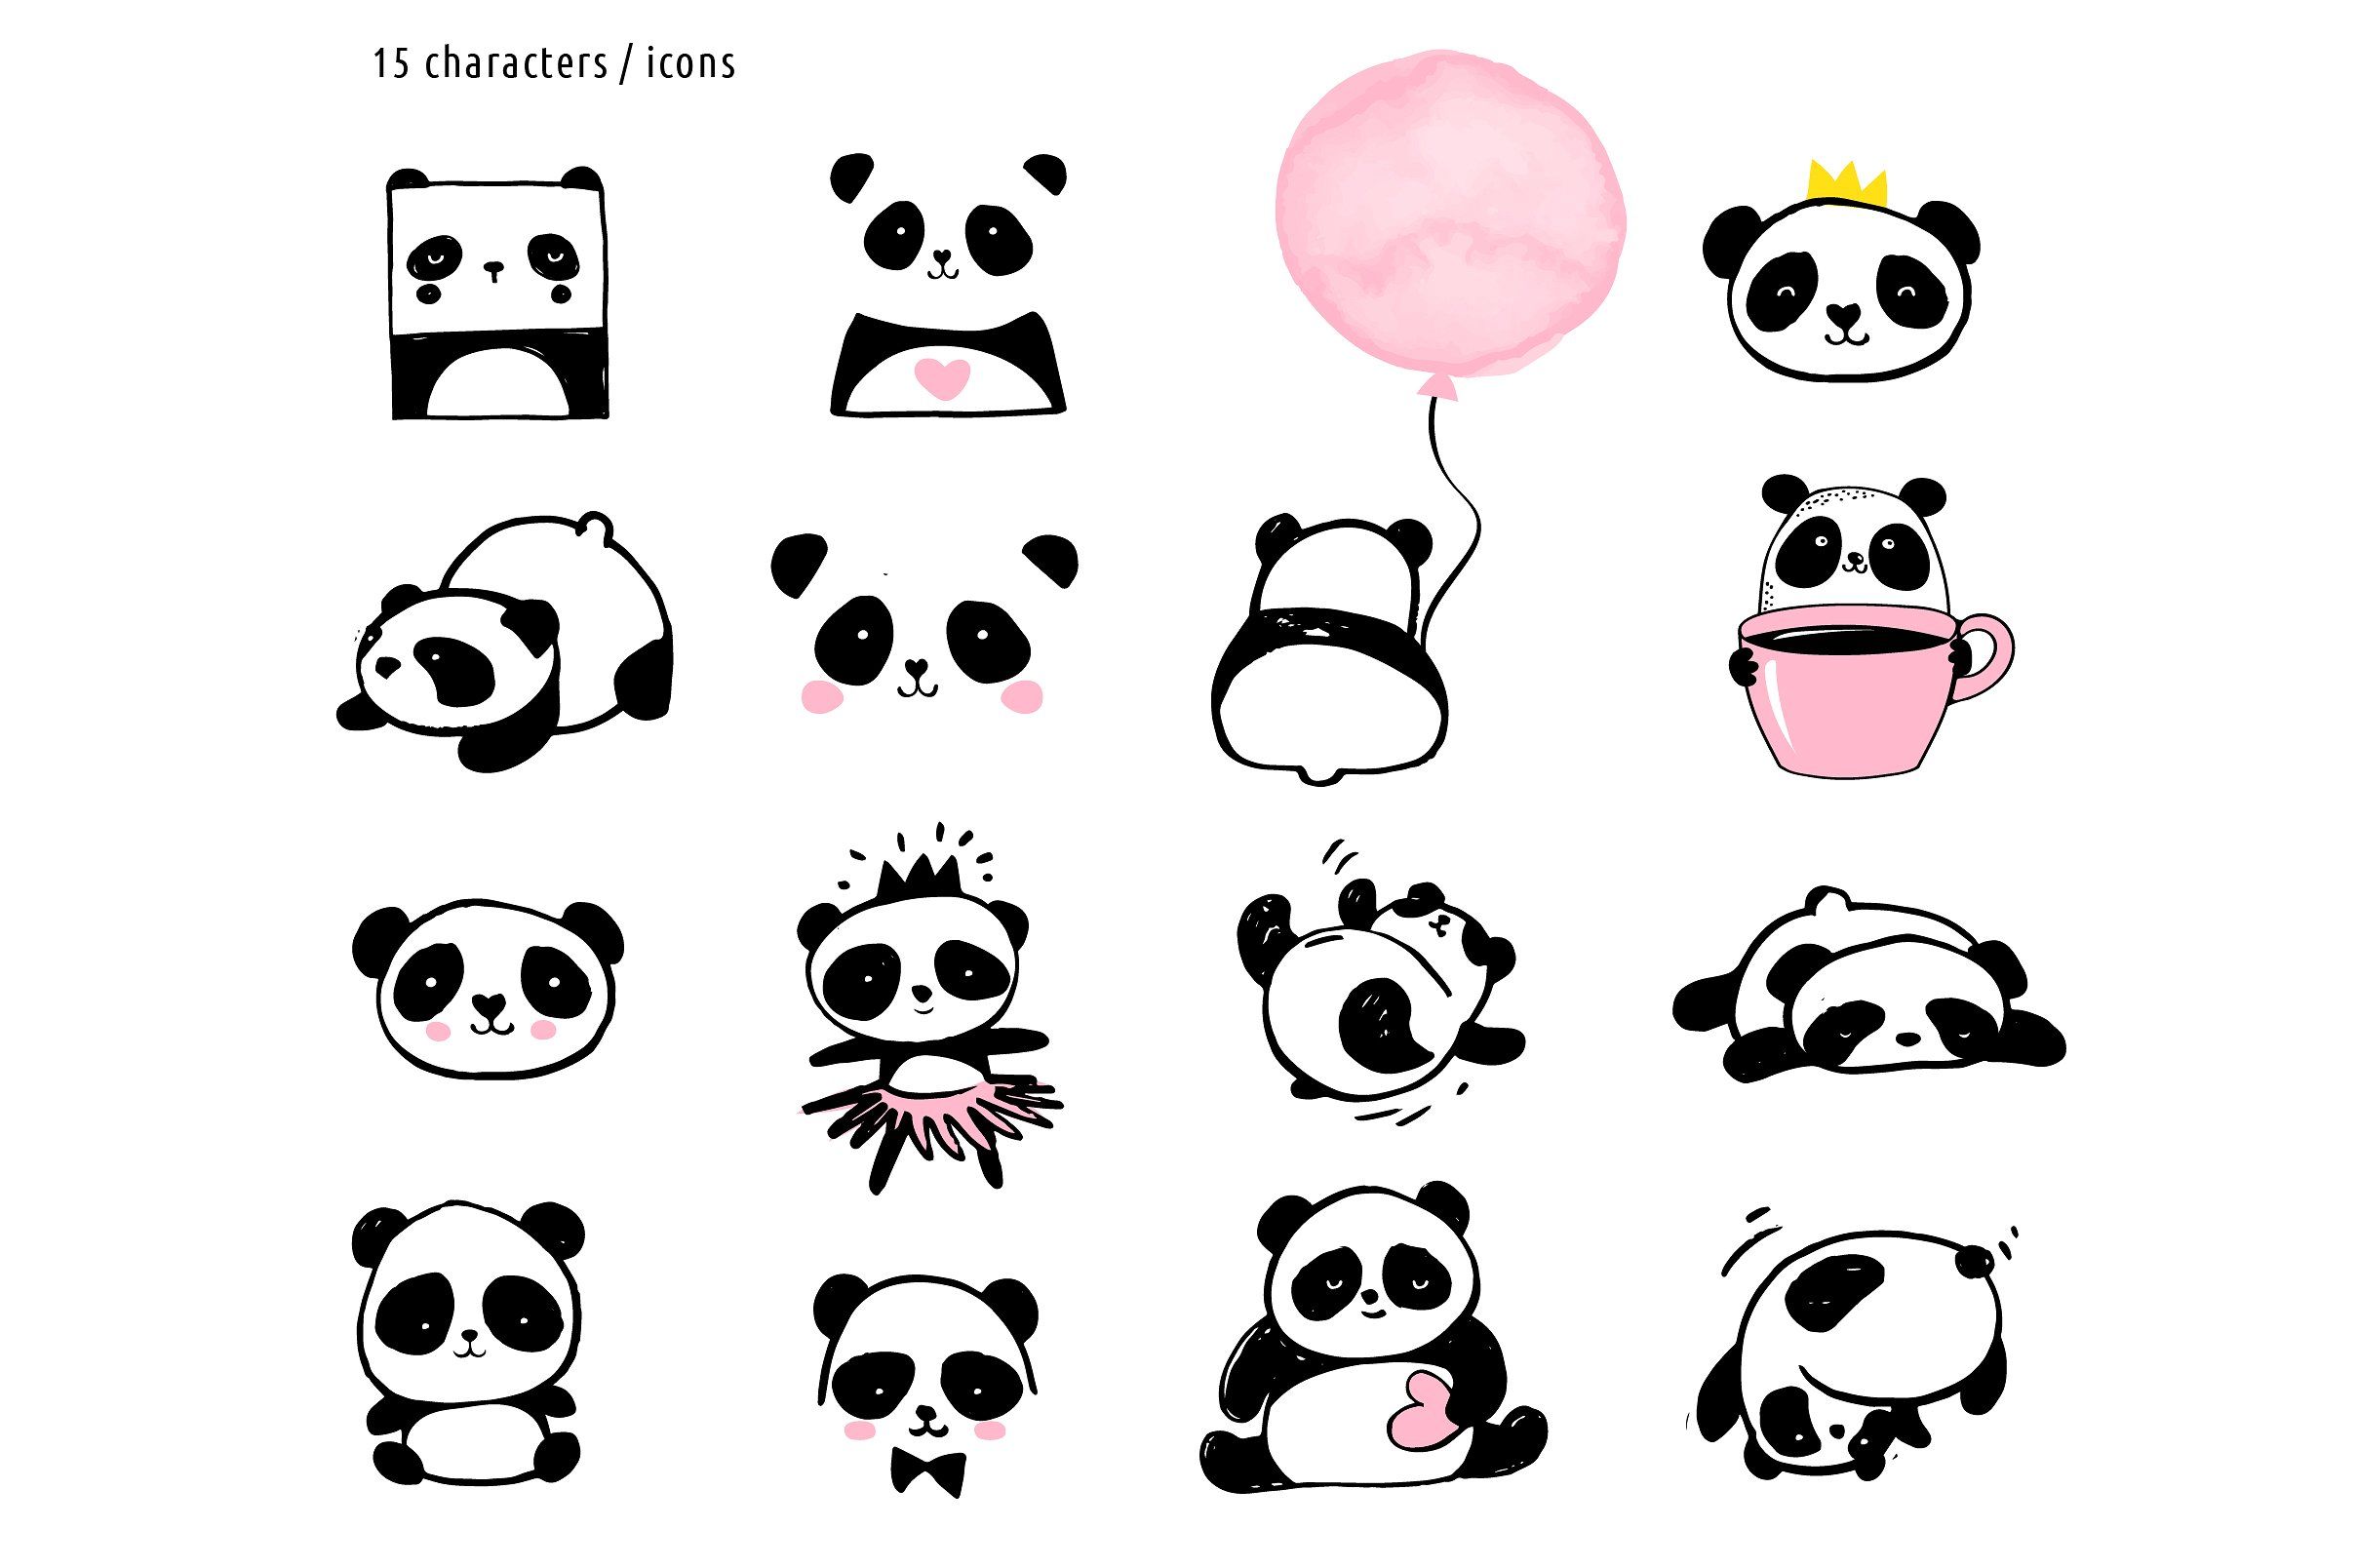 Panda bear design collection by Marish on